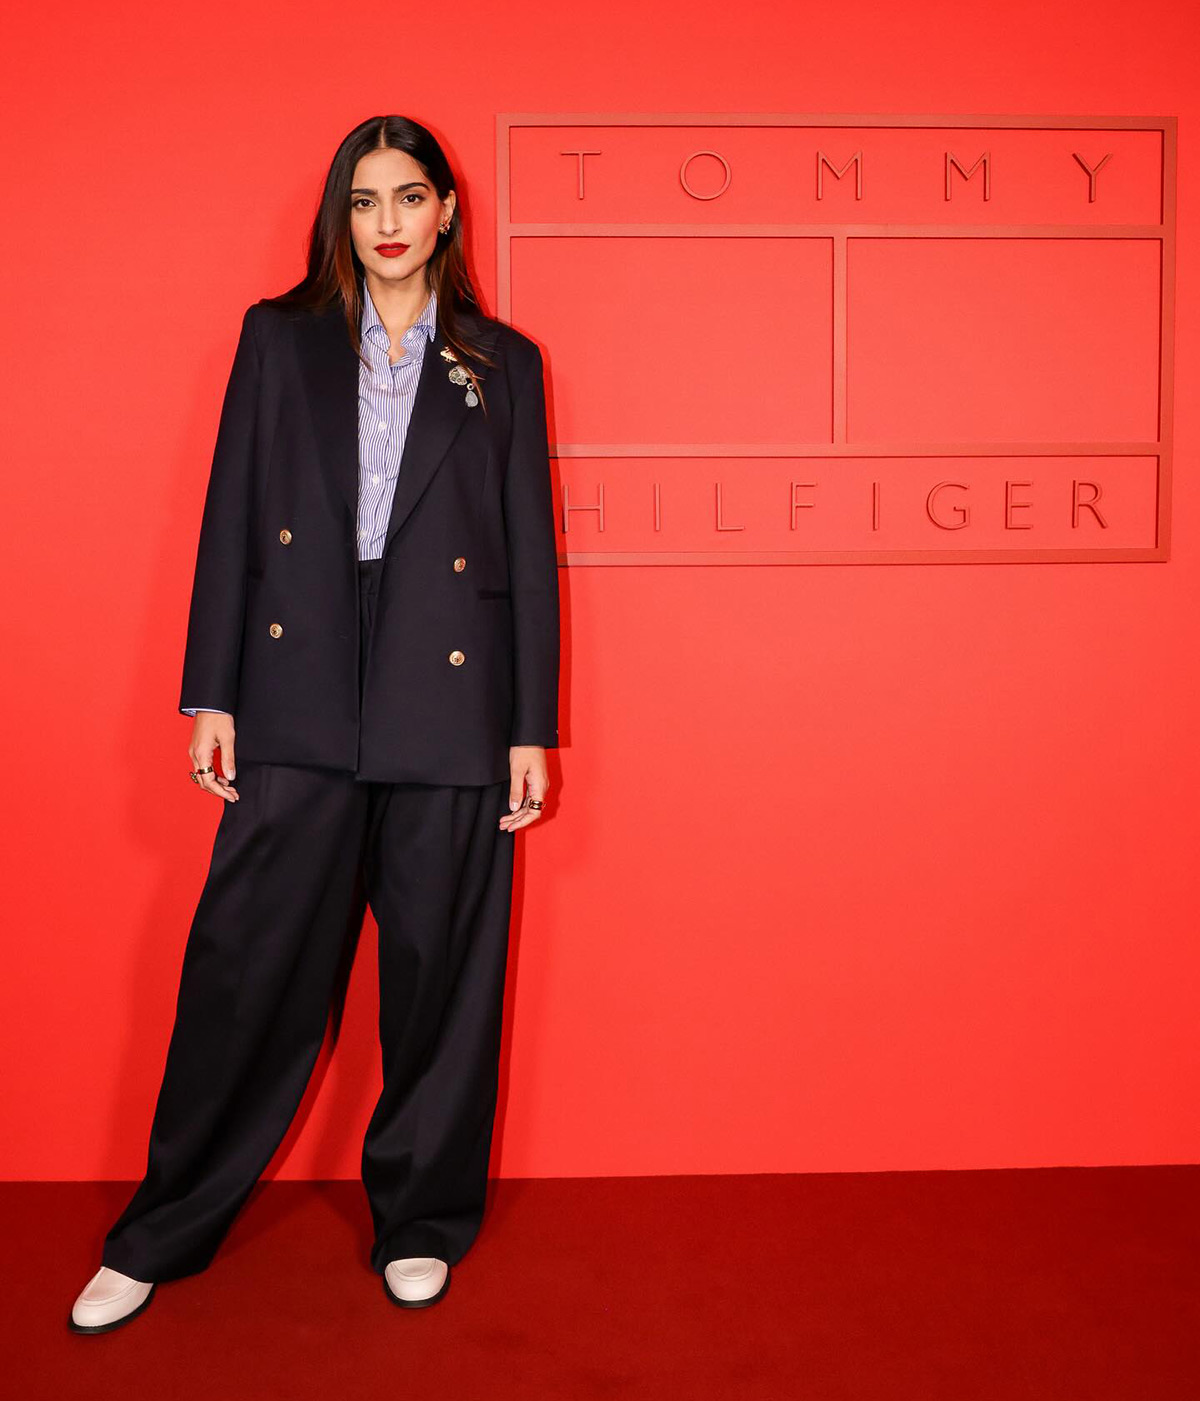 Sonam Kapoor has a fantastic sense of style, says Tommy Hilfiger